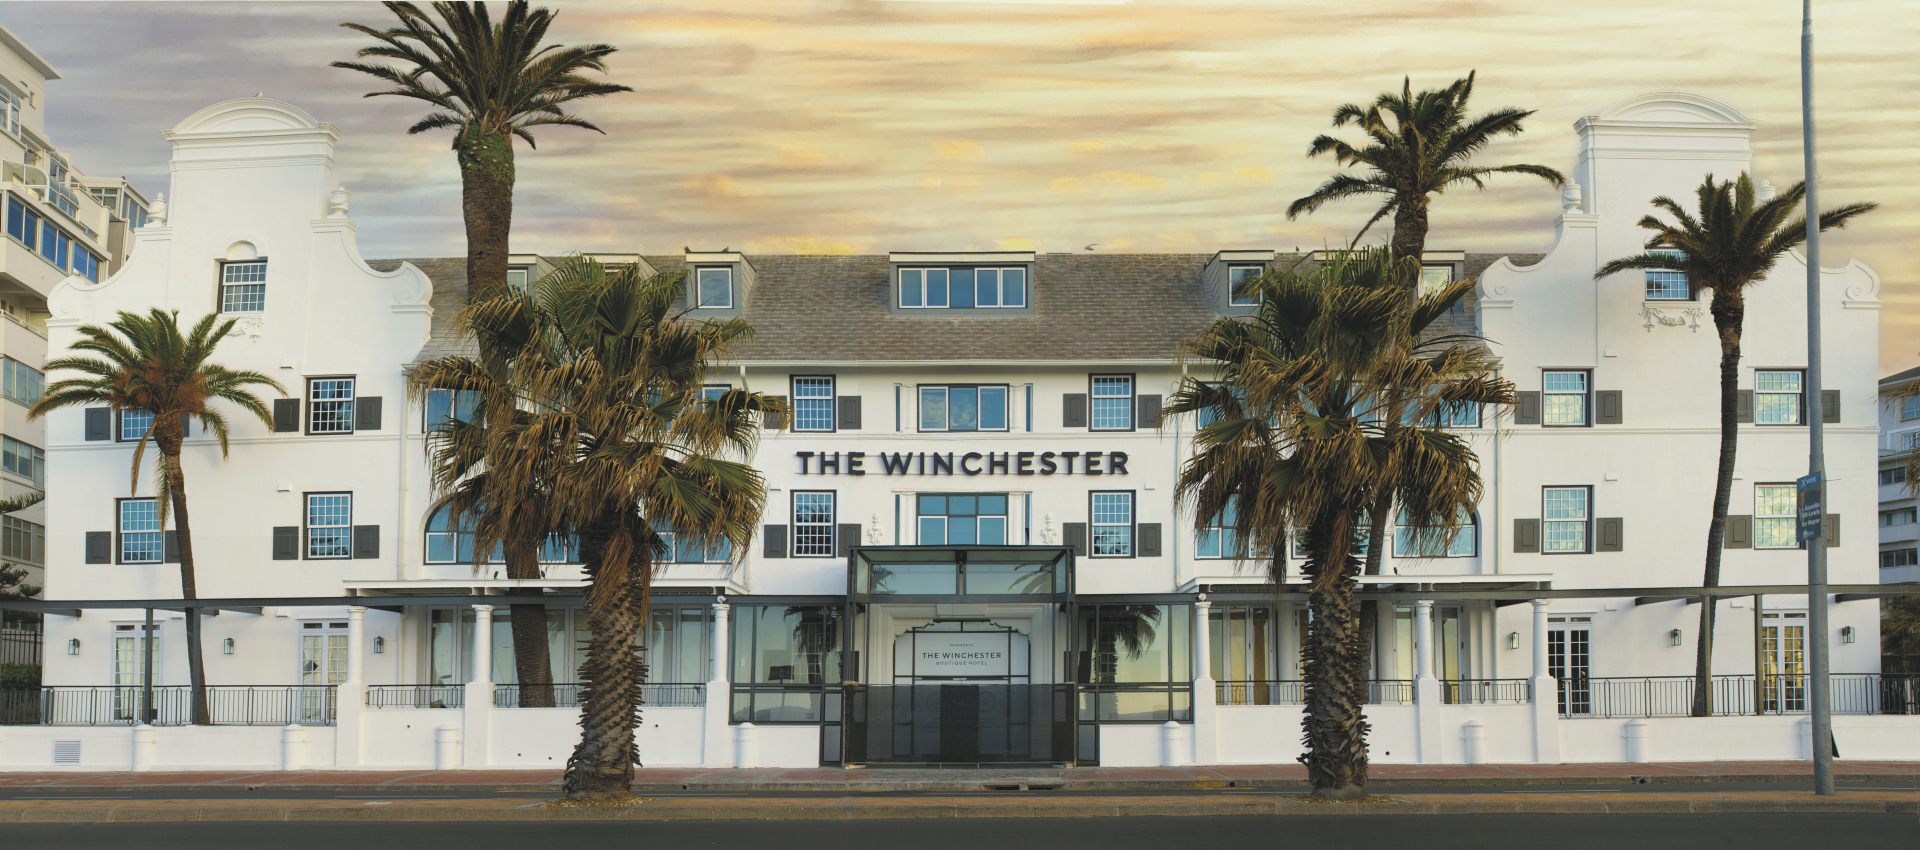 The Winchester Hotel, ©Nick van der Touw